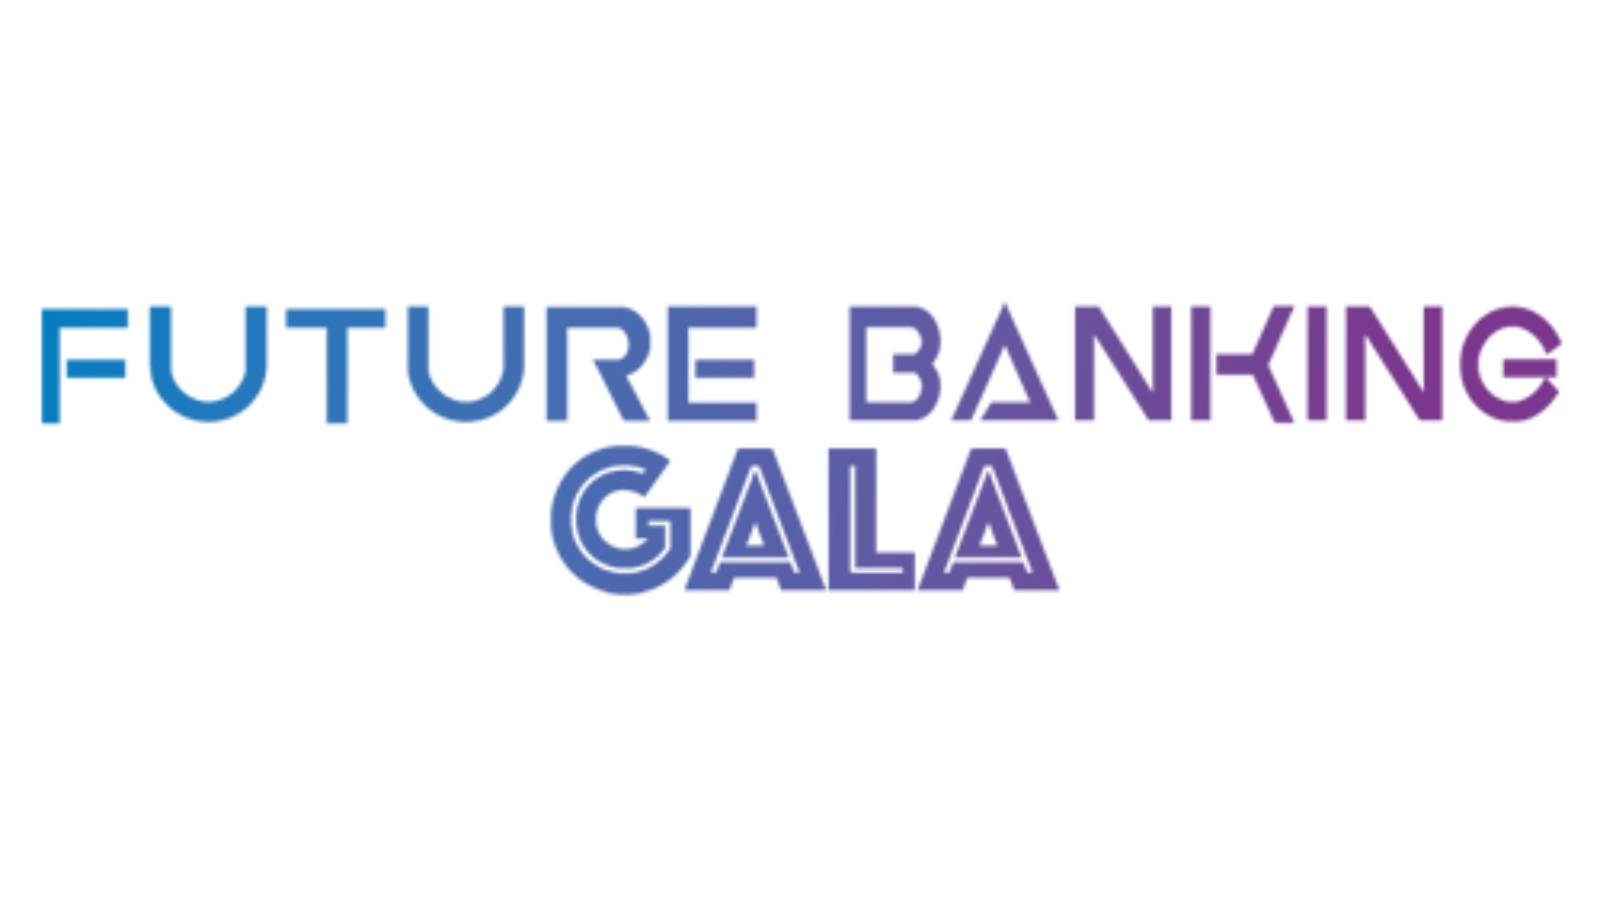 Future Banking Gala 2023